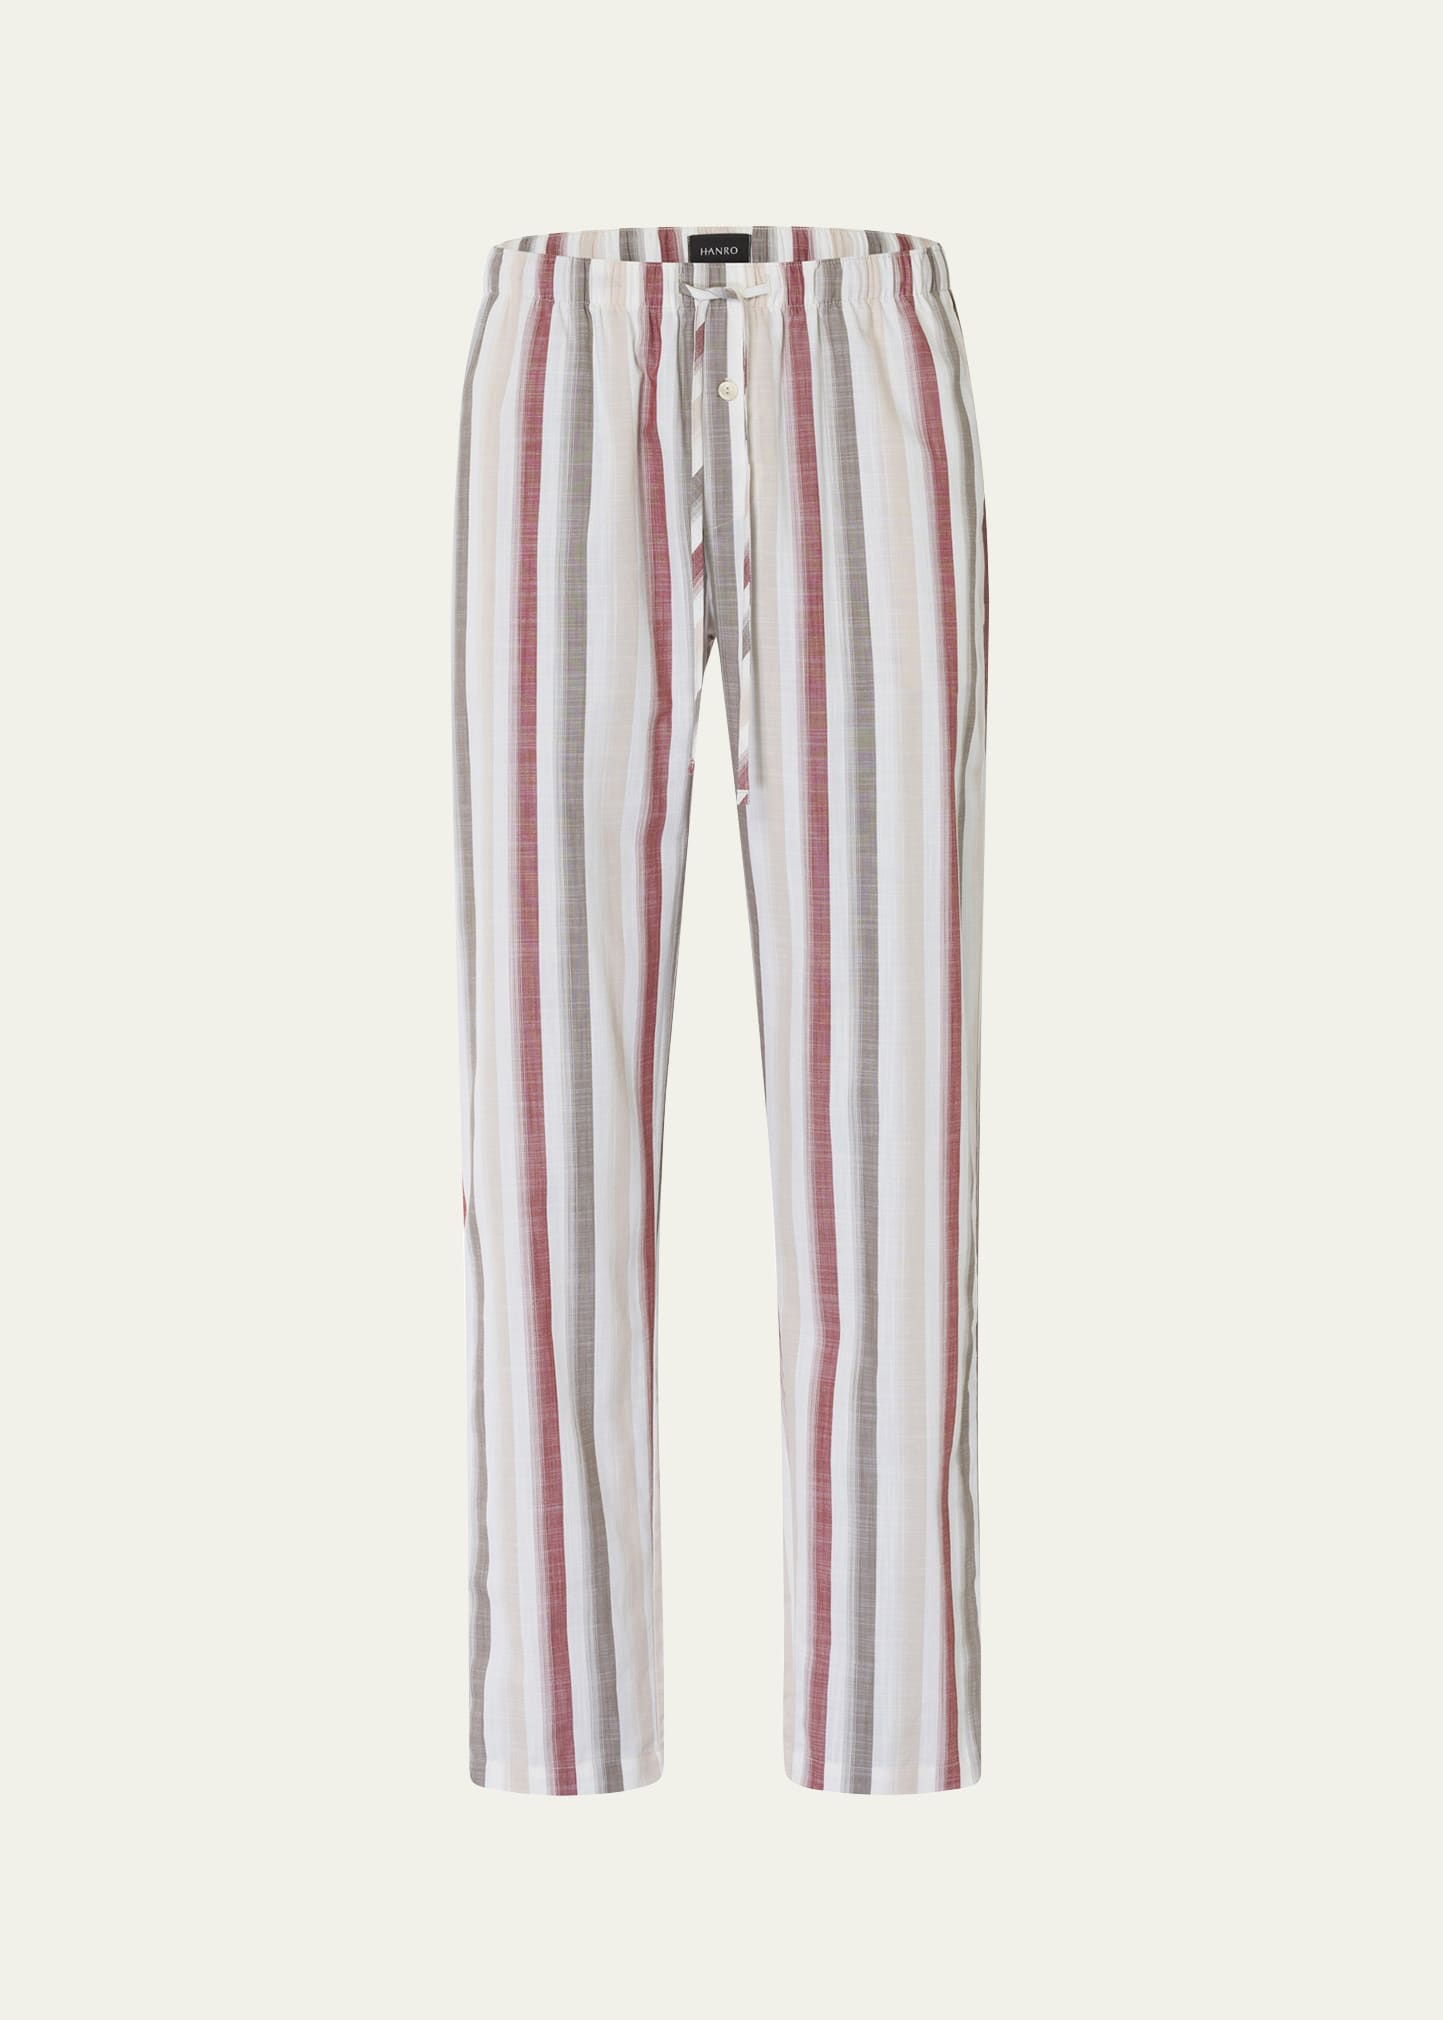 Men's Night Day Striped Lounge Pants